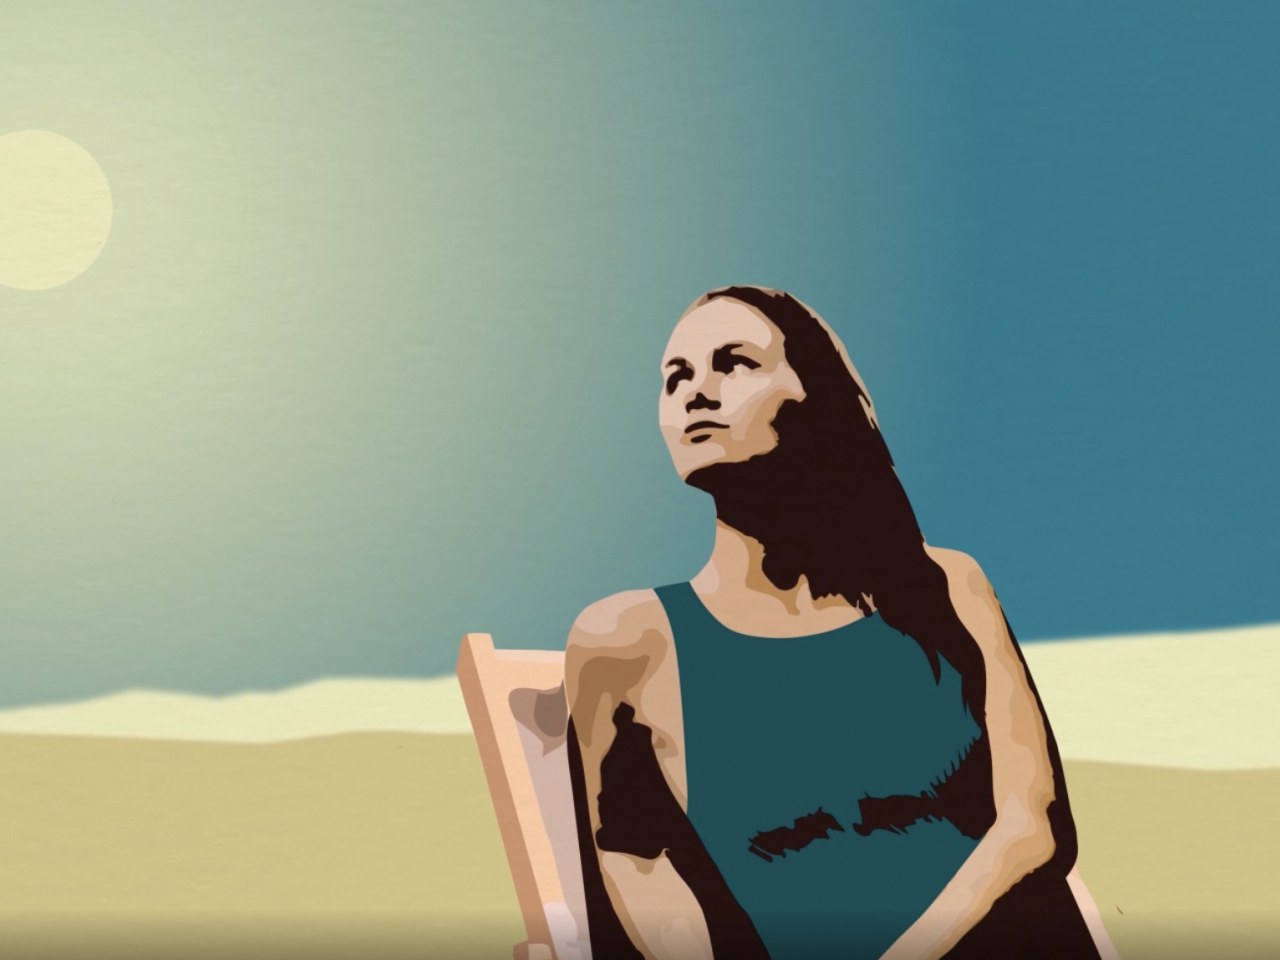 artistic representation of a woman sitting in the bright sun